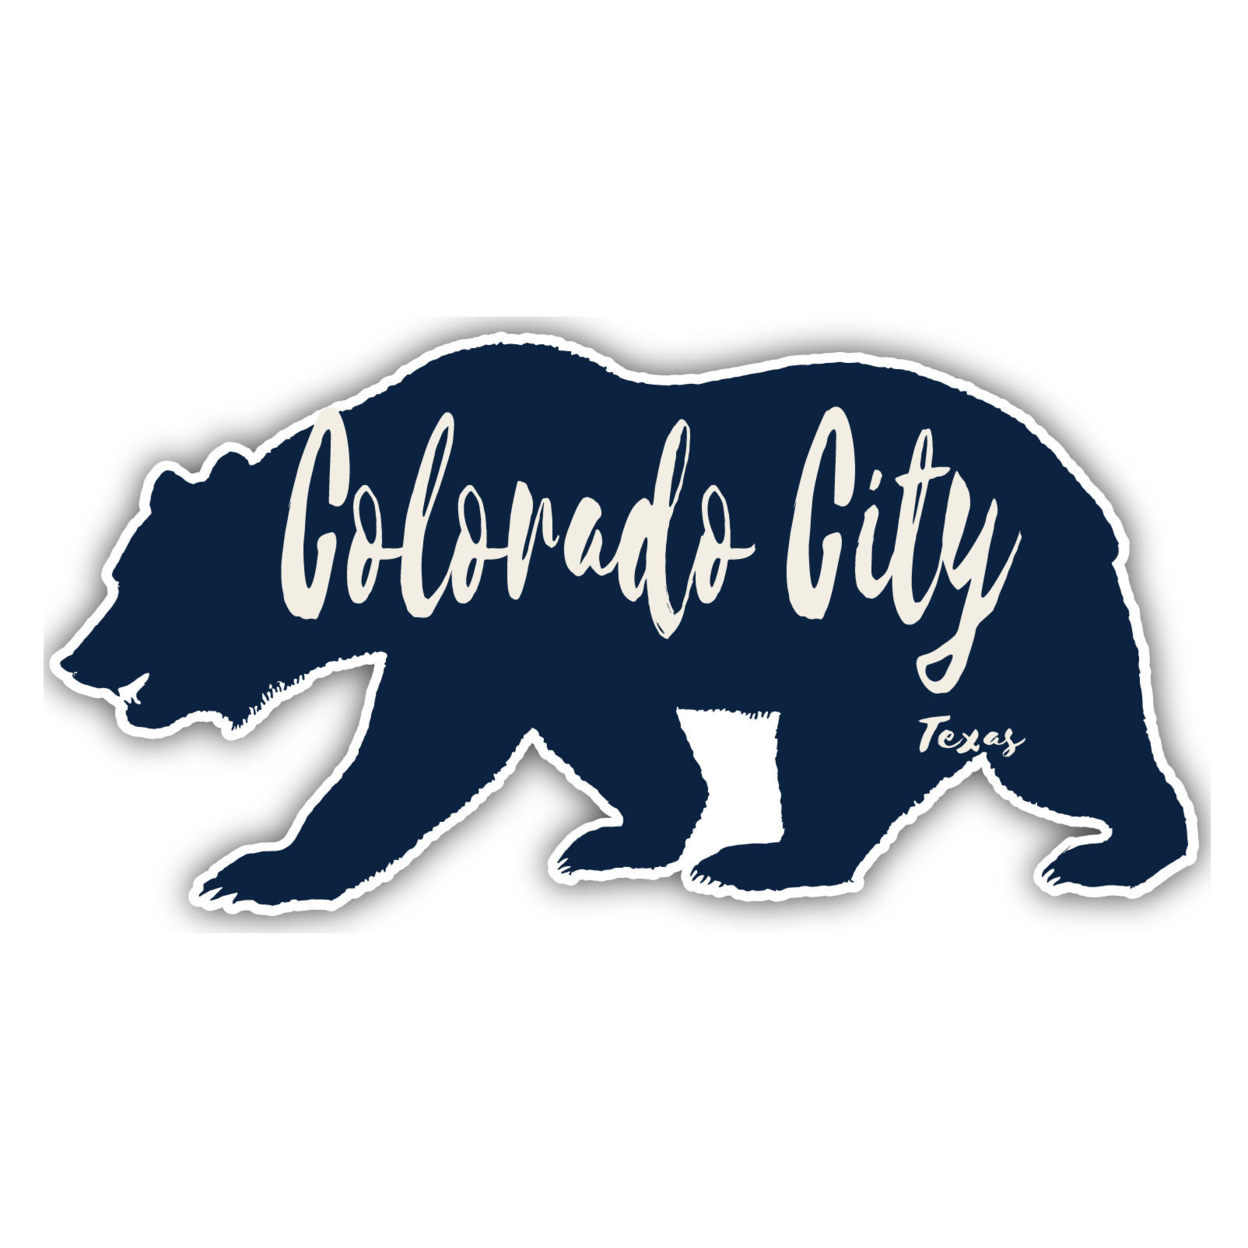 Colorado City Texas Souvenir Decorative Stickers (Choose Theme And Size) - 4-Pack, 4-Inch, Bear